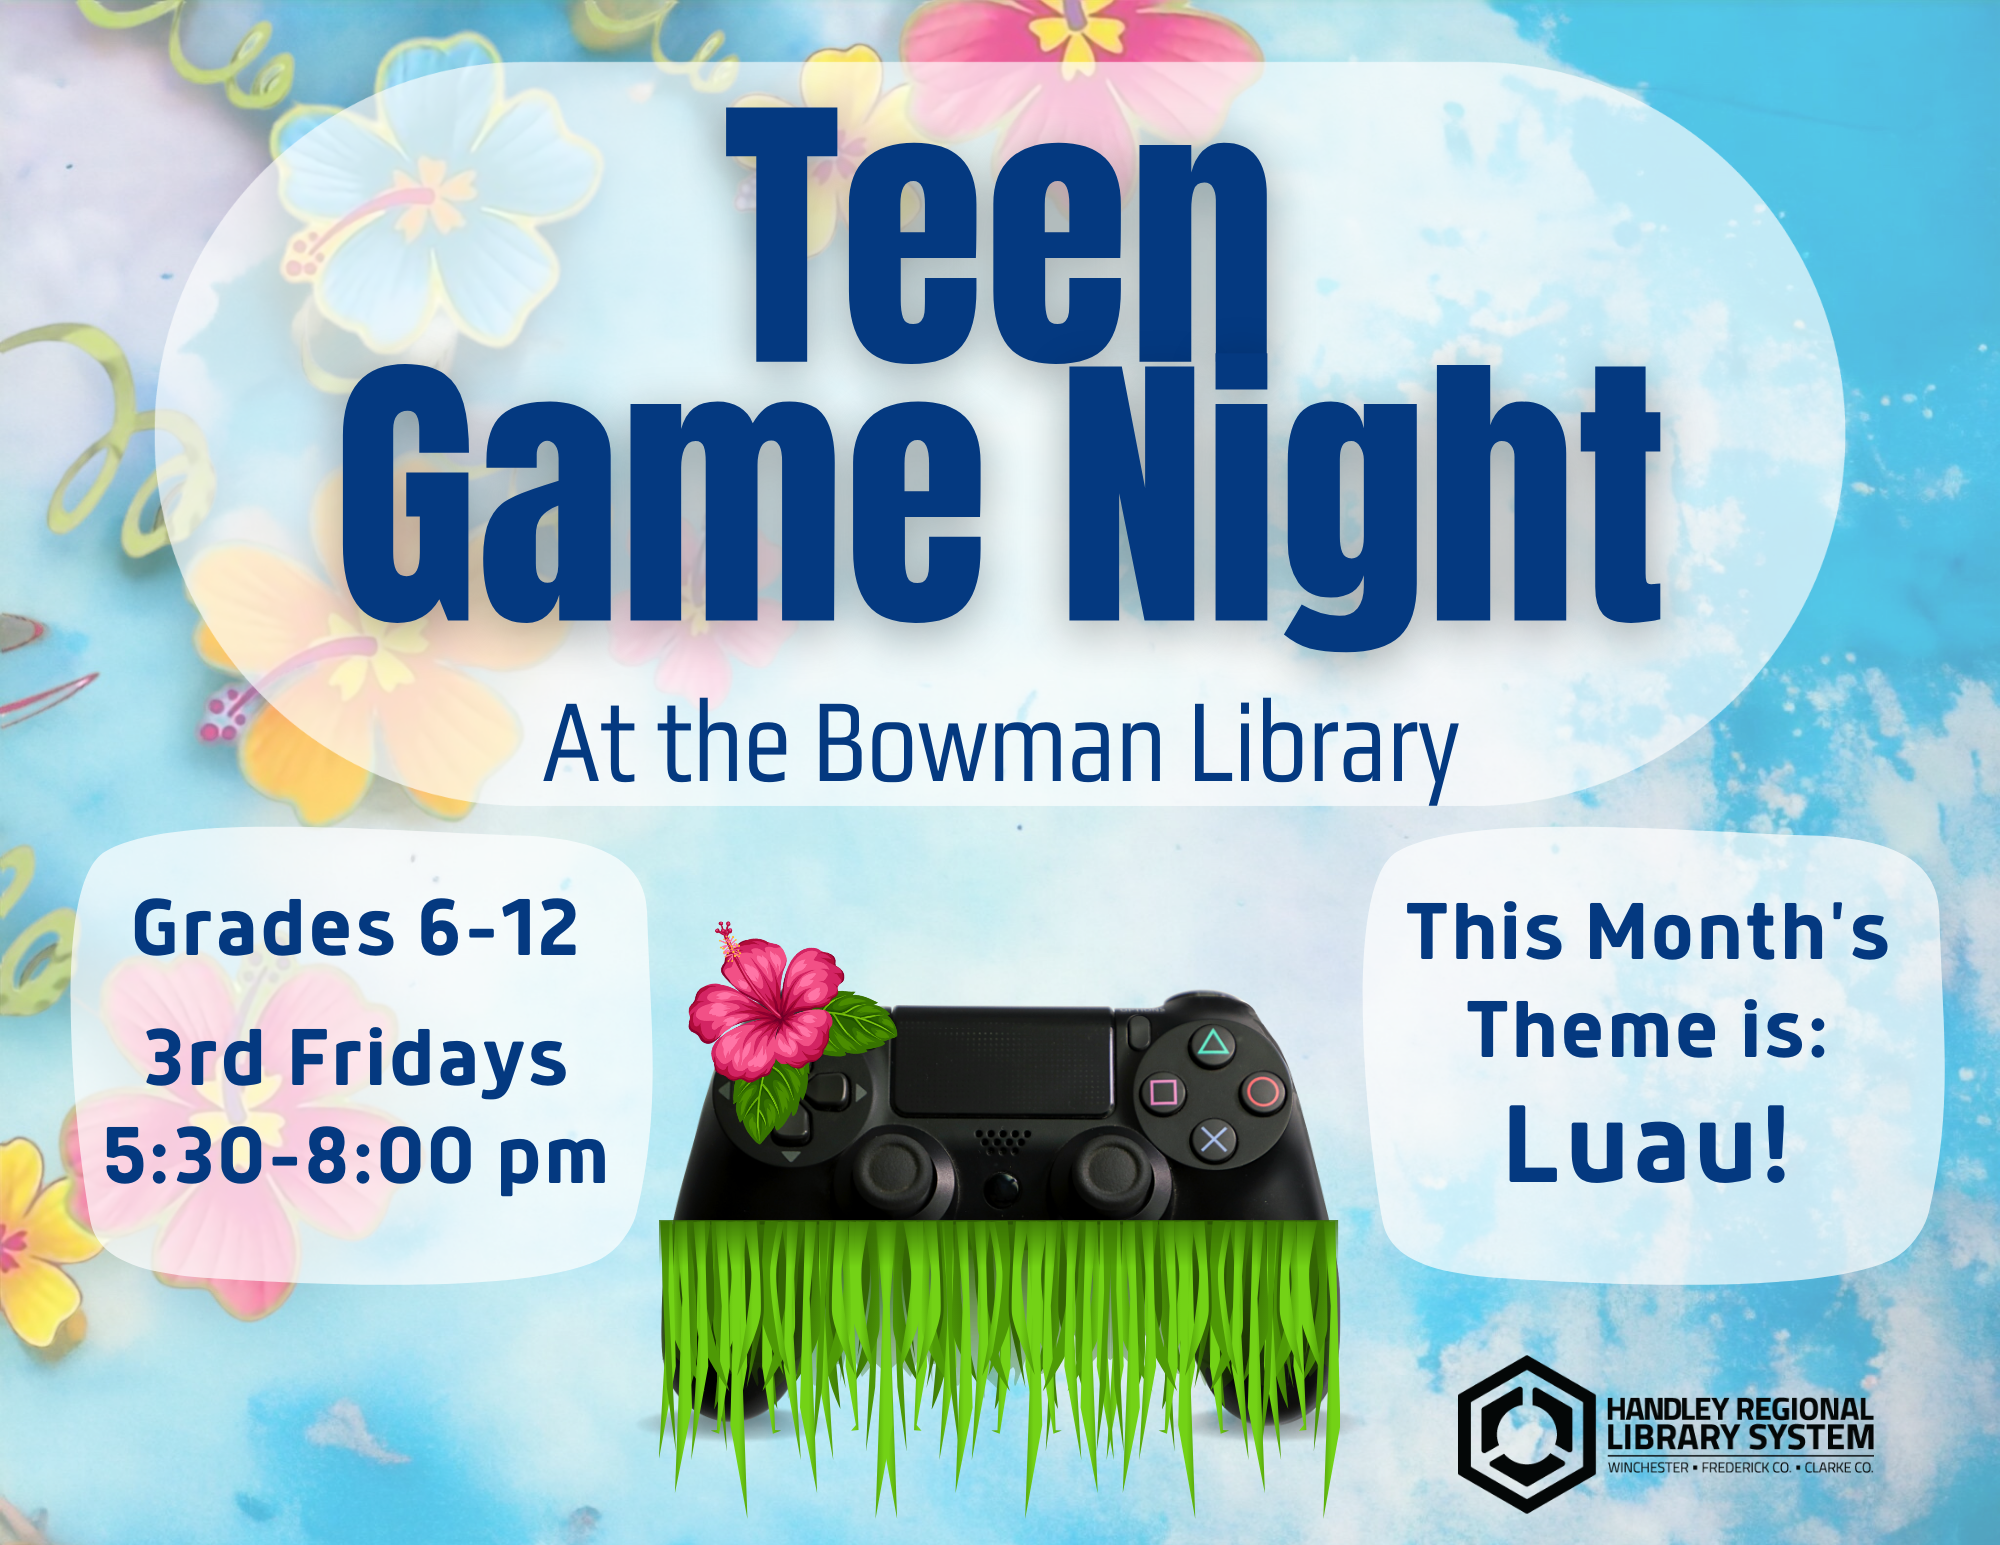 Teen Game Night Poster with Luau Theme